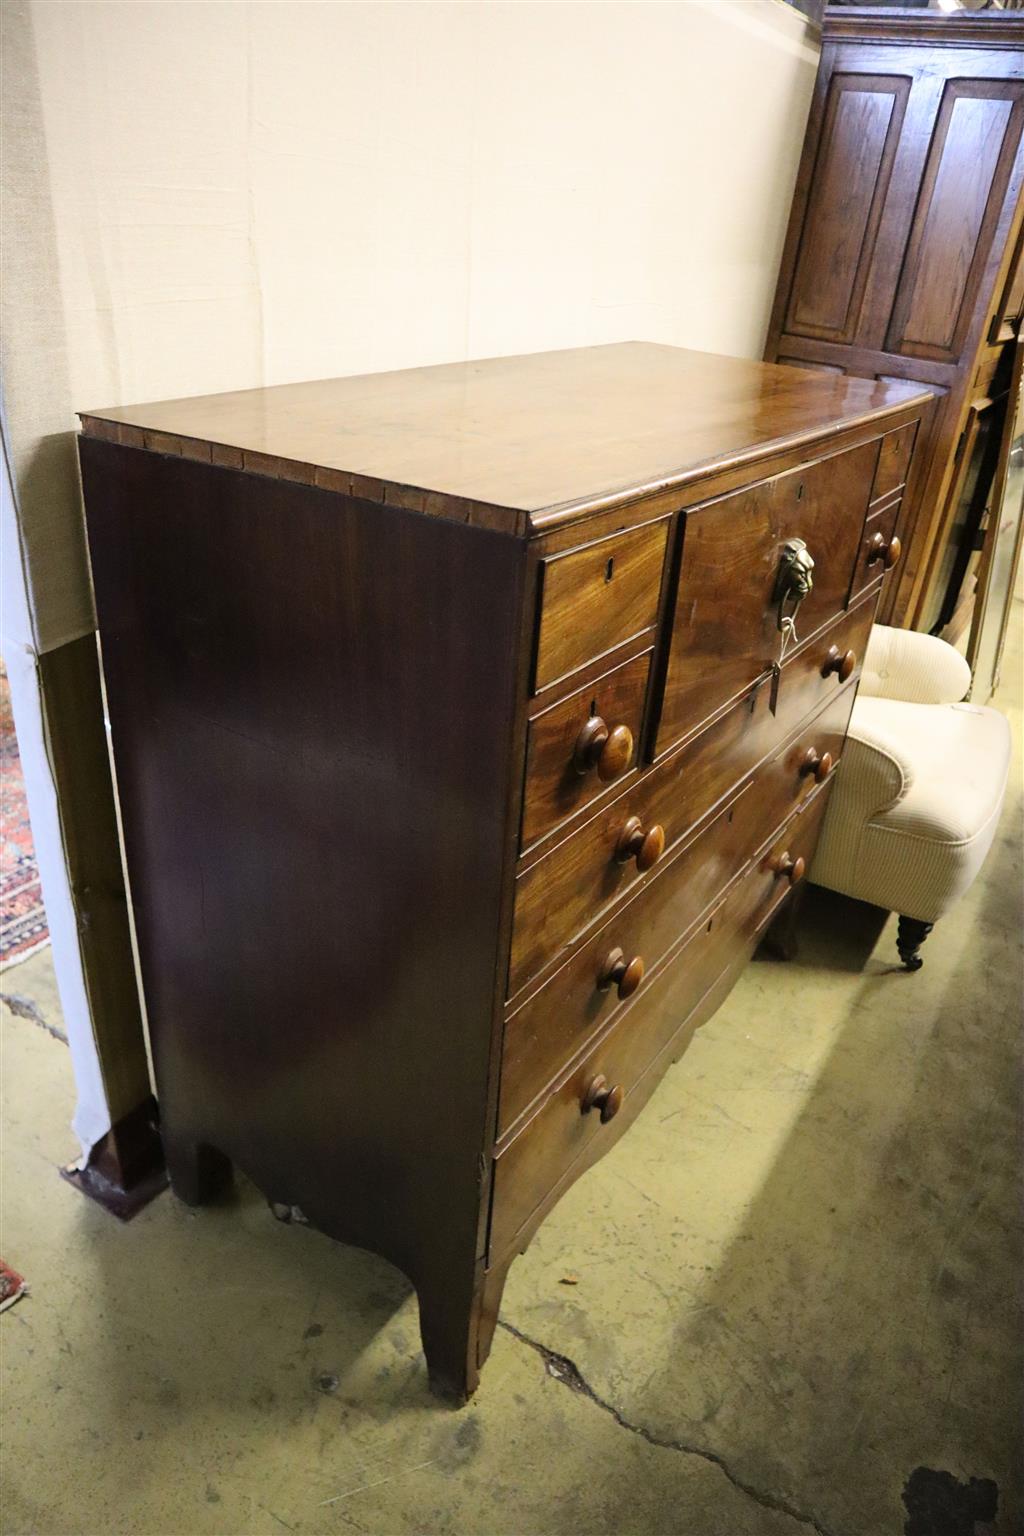 A George IV mahogany secretaire chest, width 124cm, depth 55cm, height 116cm